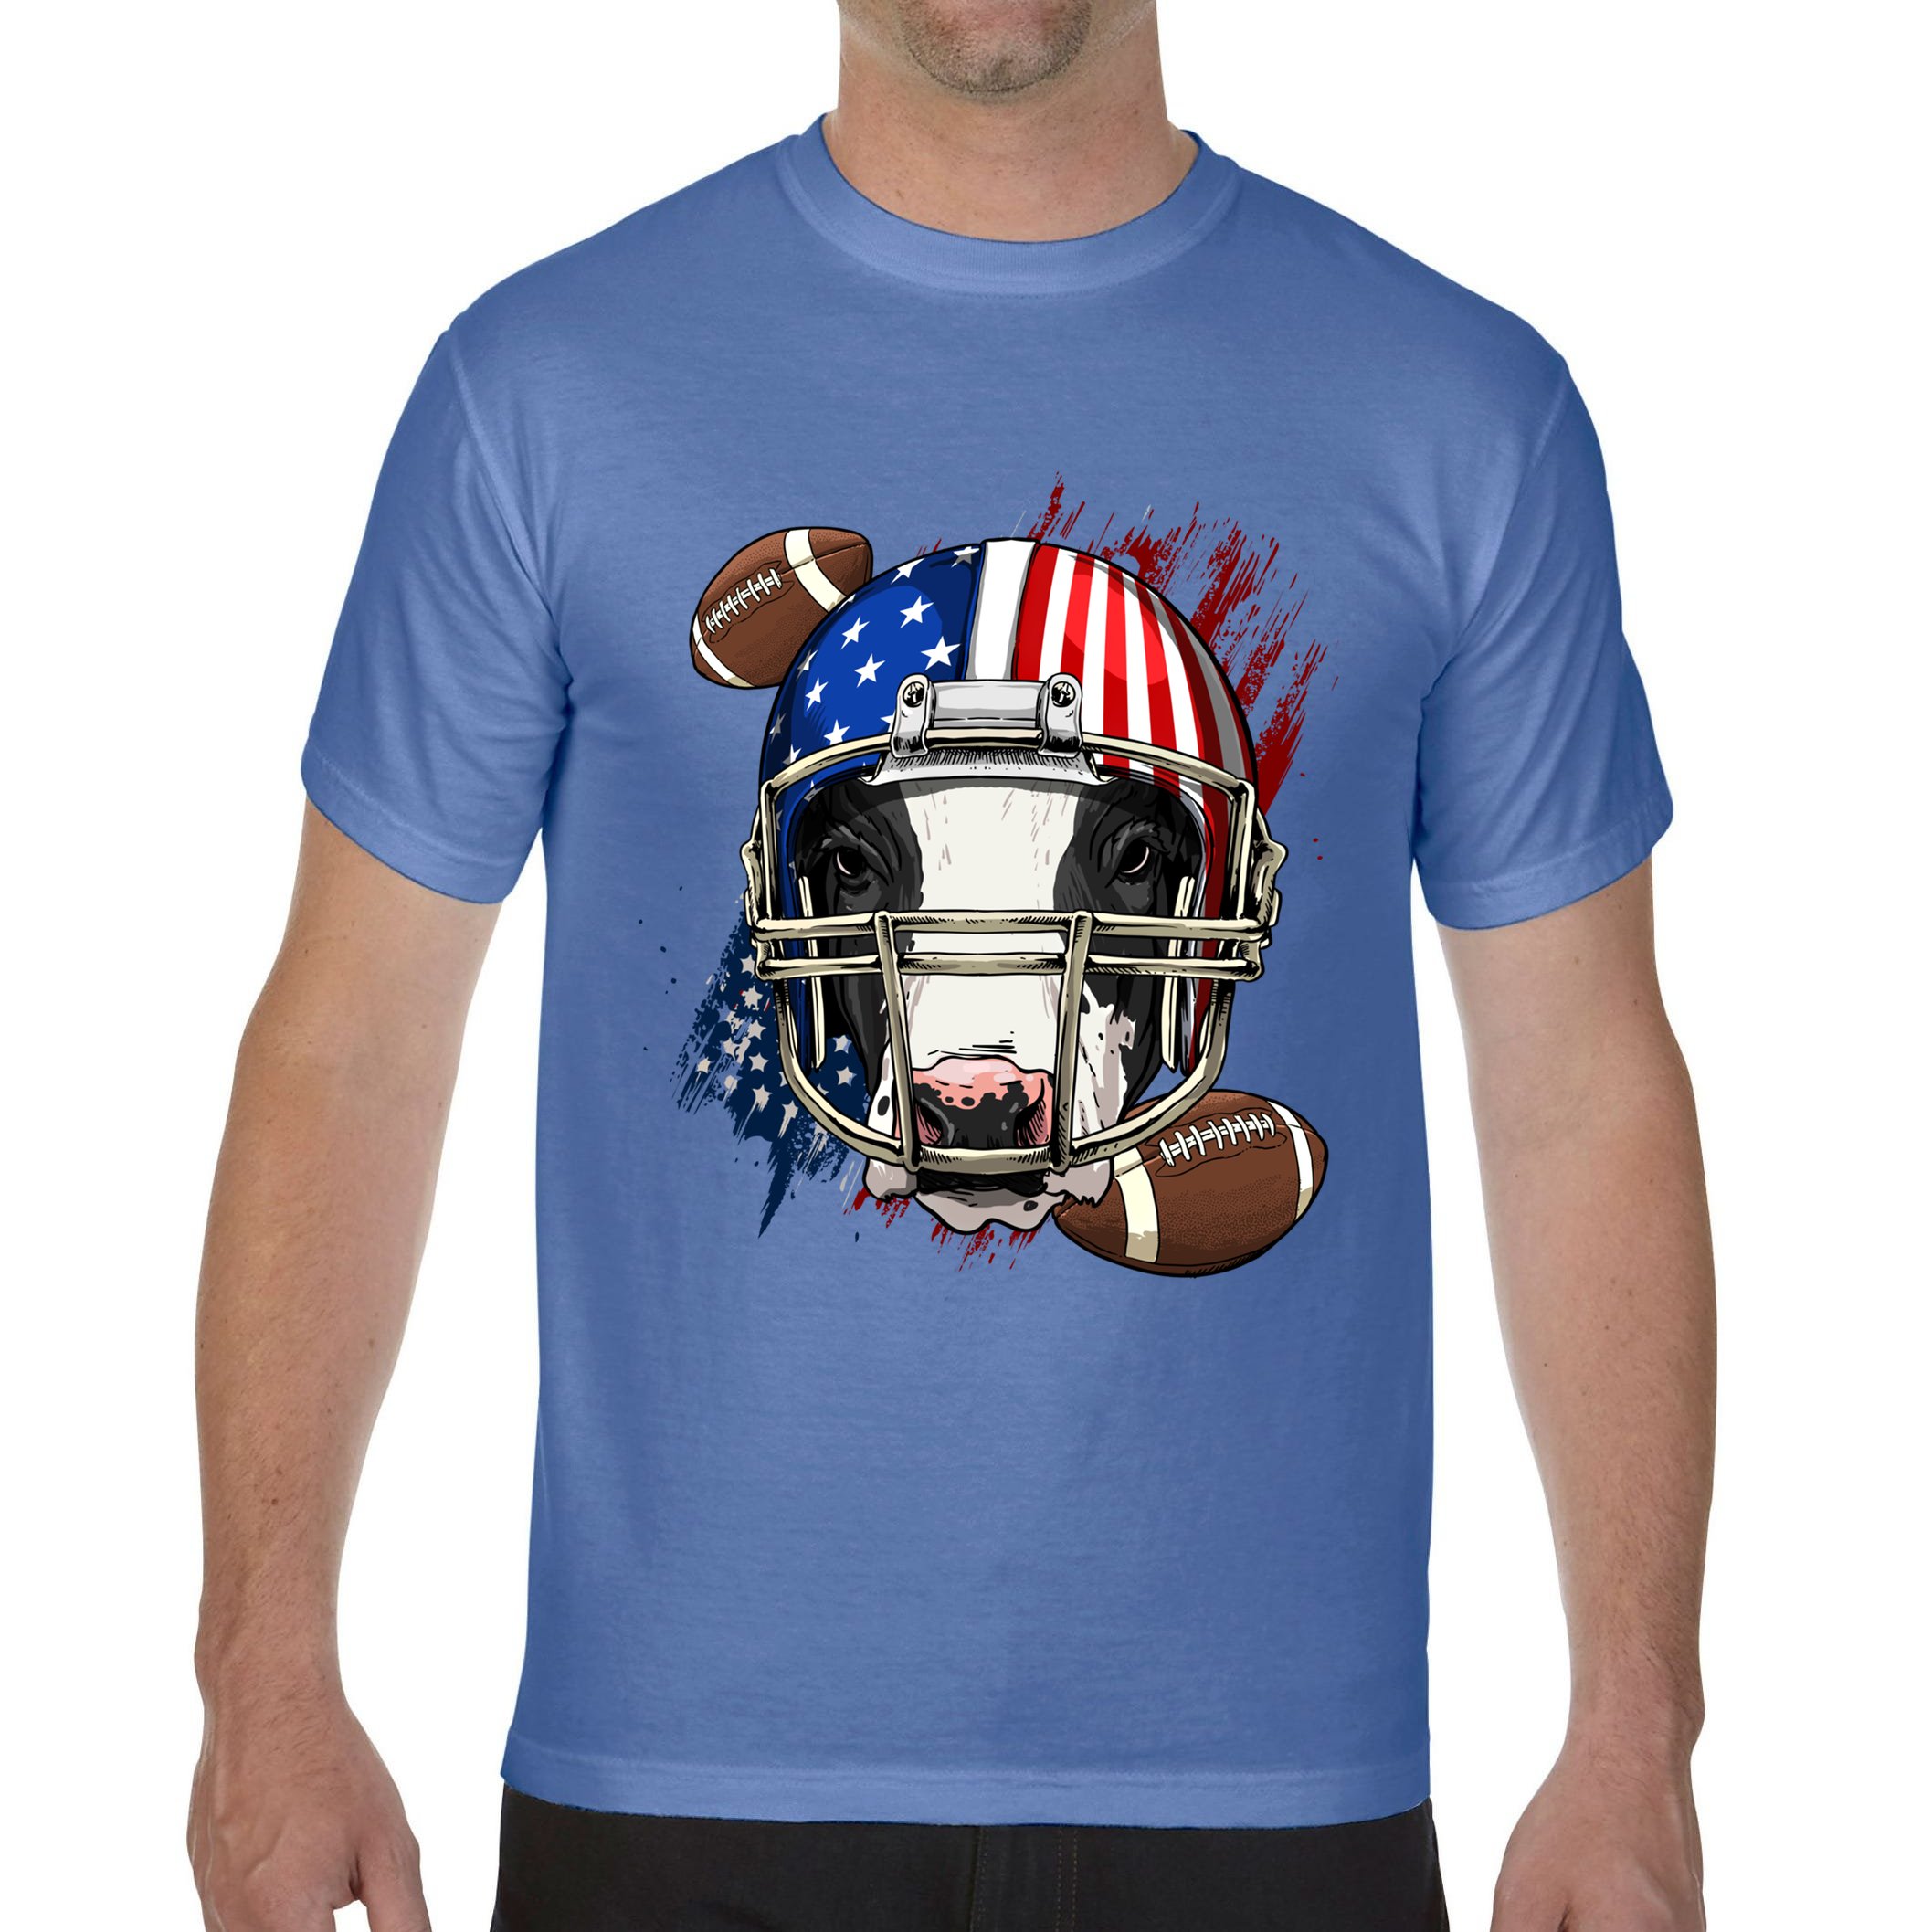 american football t shirt